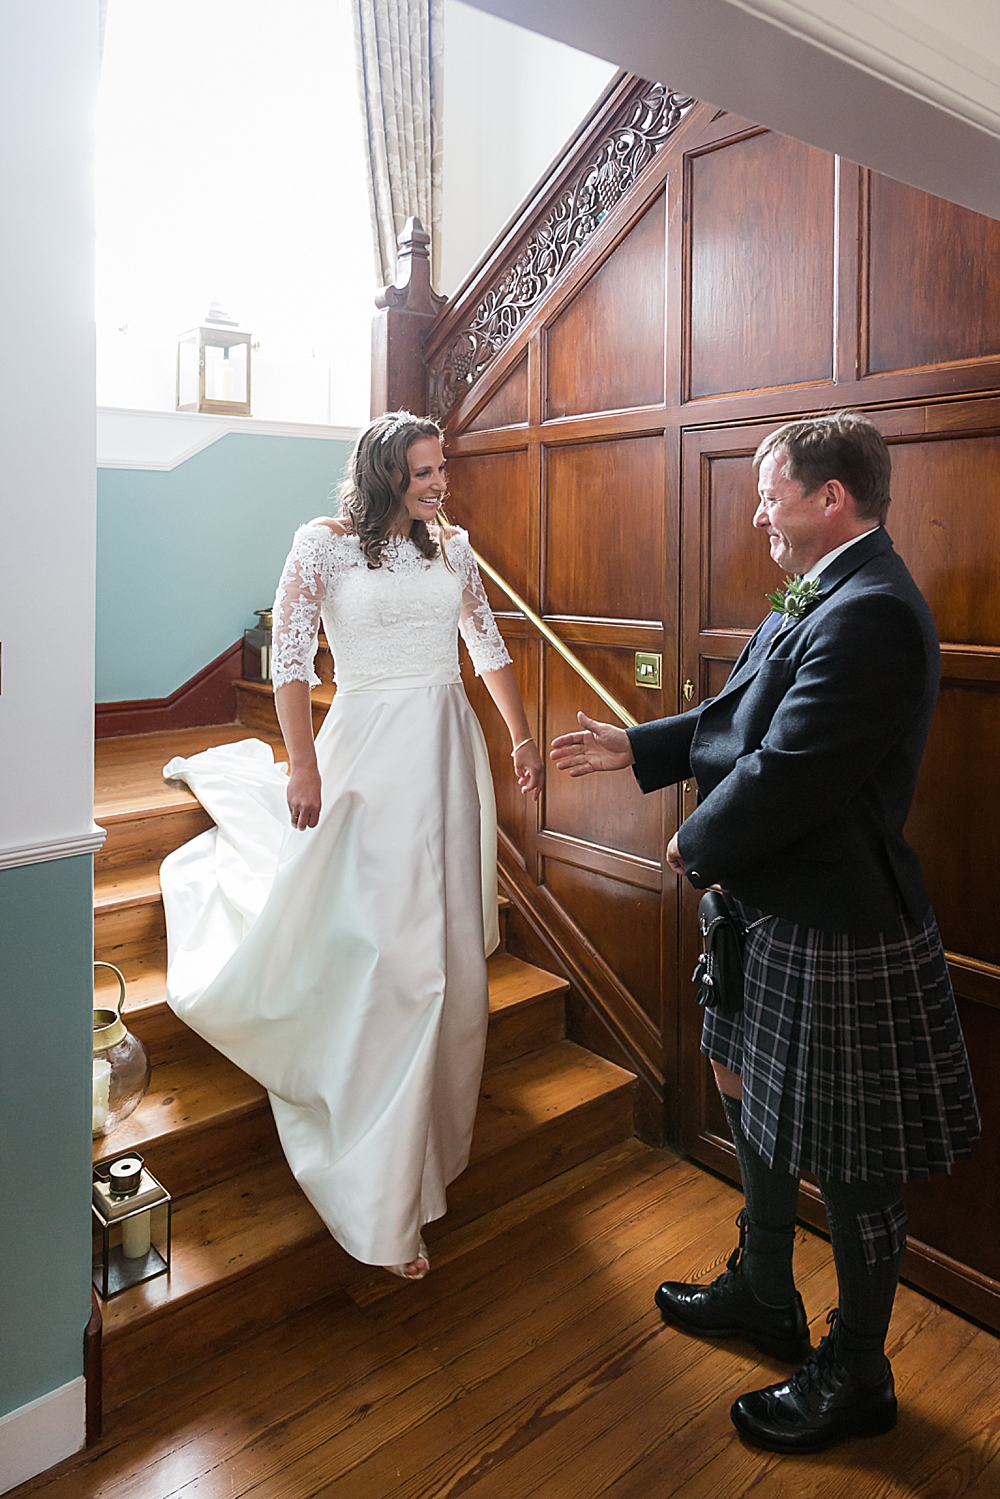 Winton Castle Wedding, East Lothian, Edinburgh Wedding Photography, Edinburgh Wedding Photographer, Scotland